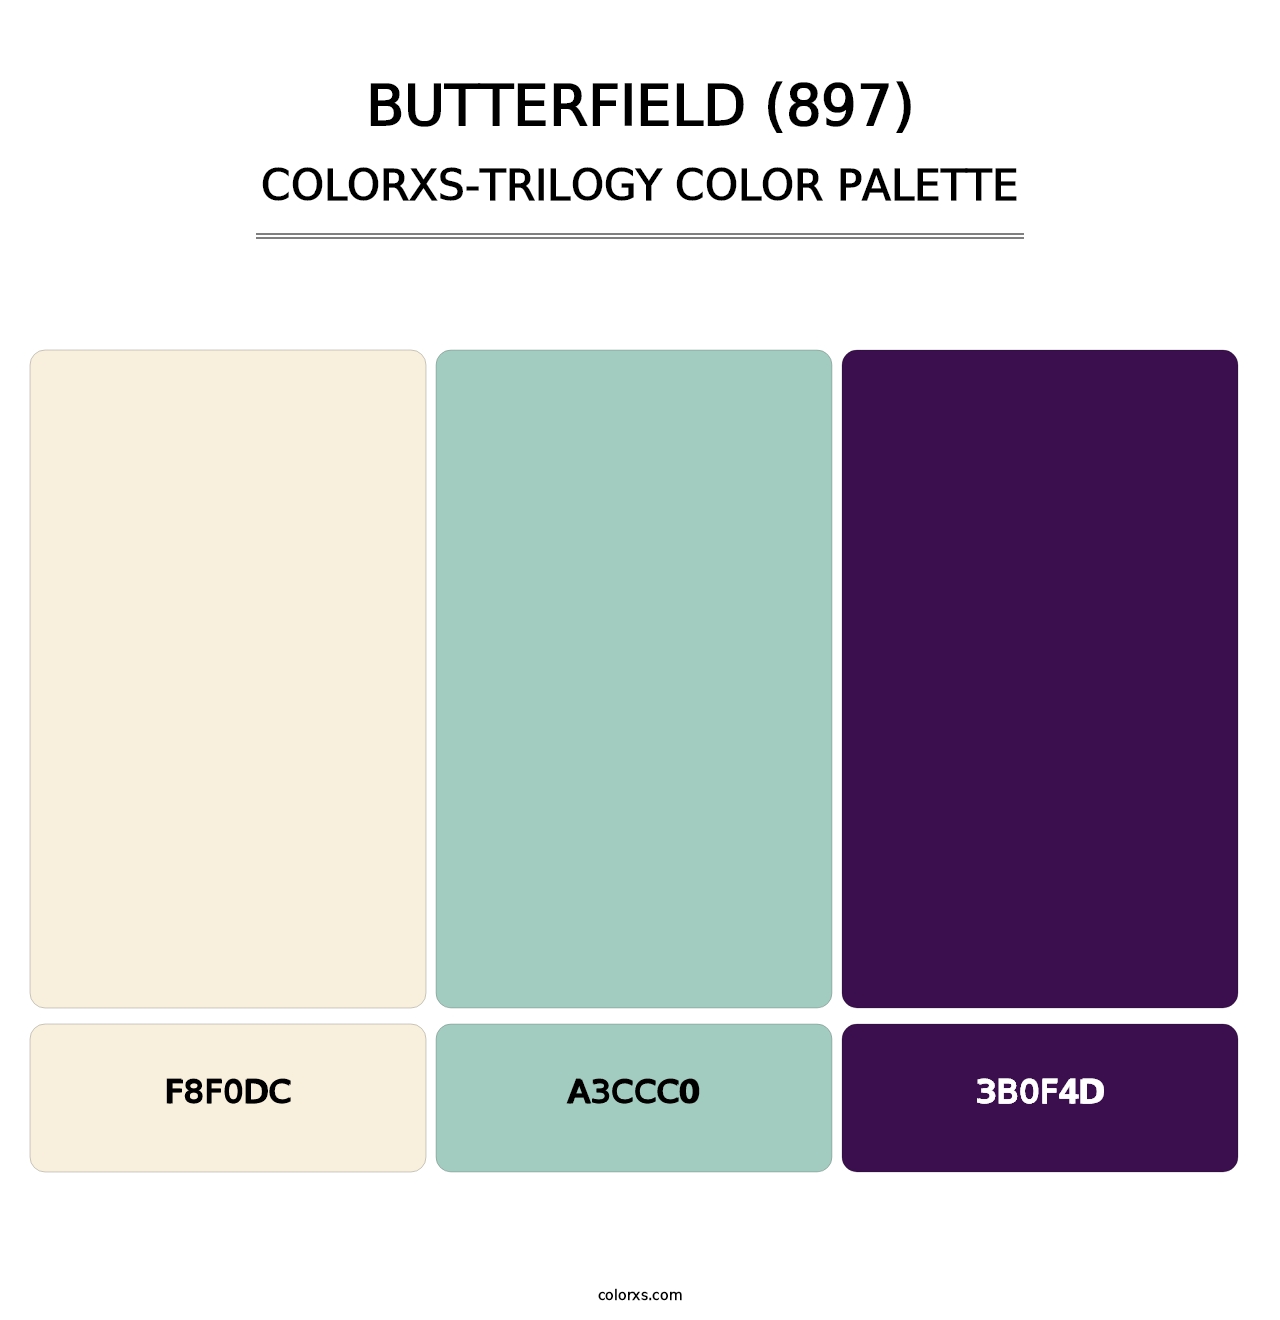 Butterfield (897) - Colorxs Trilogy Palette